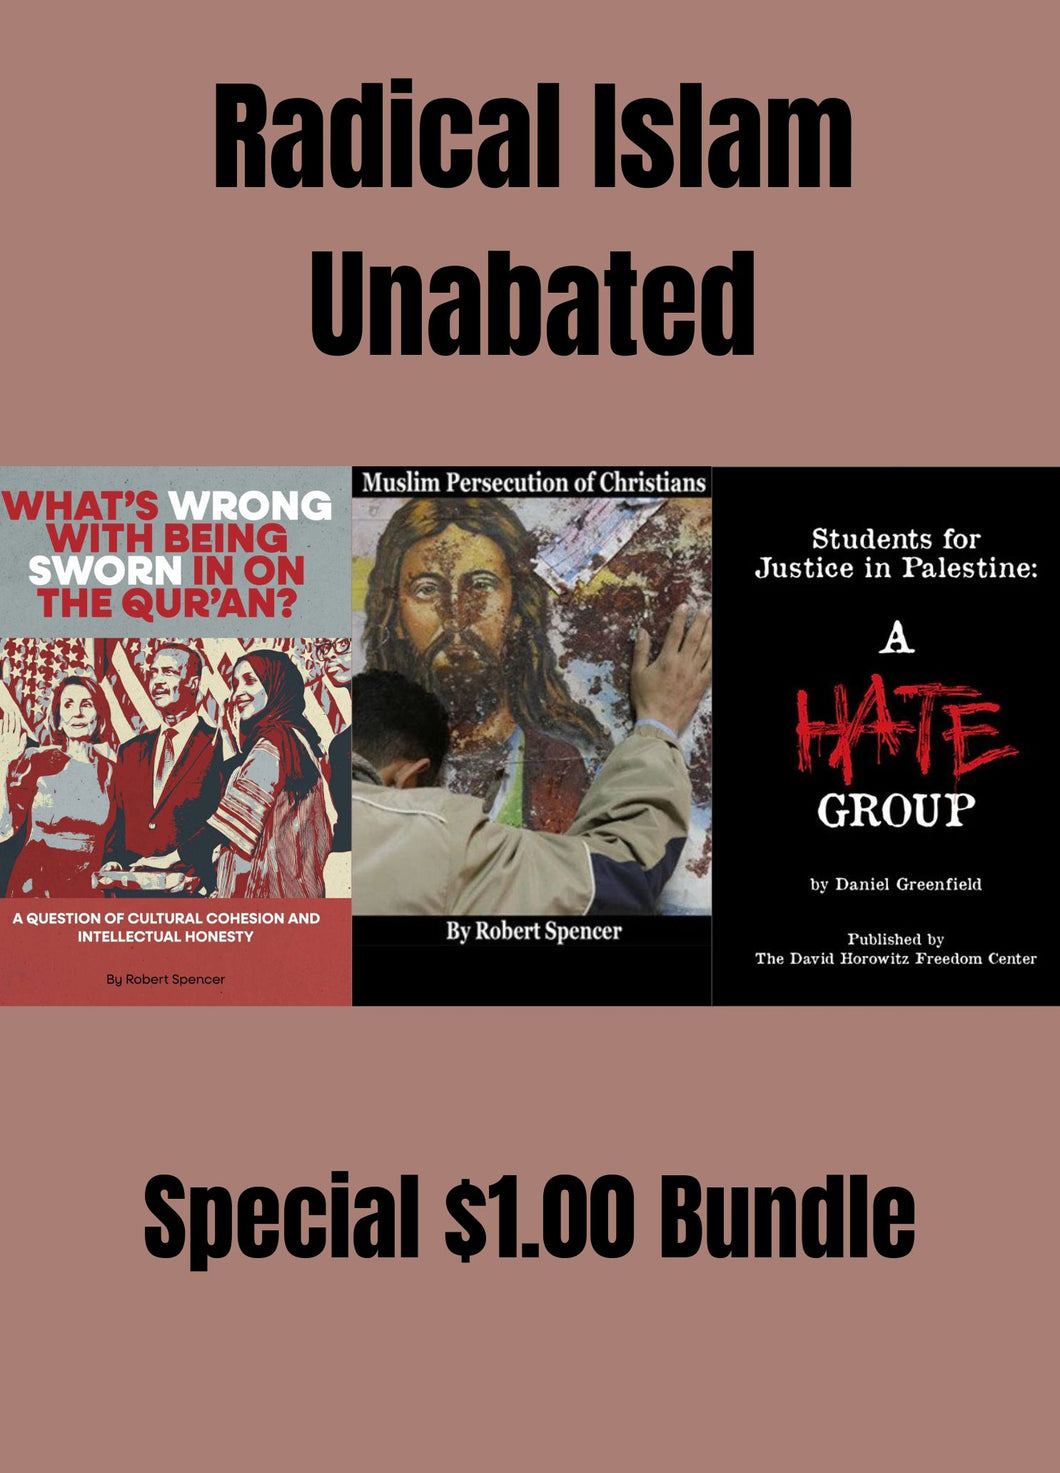 Special $1.00 Bundle: Radical Islam Unabated